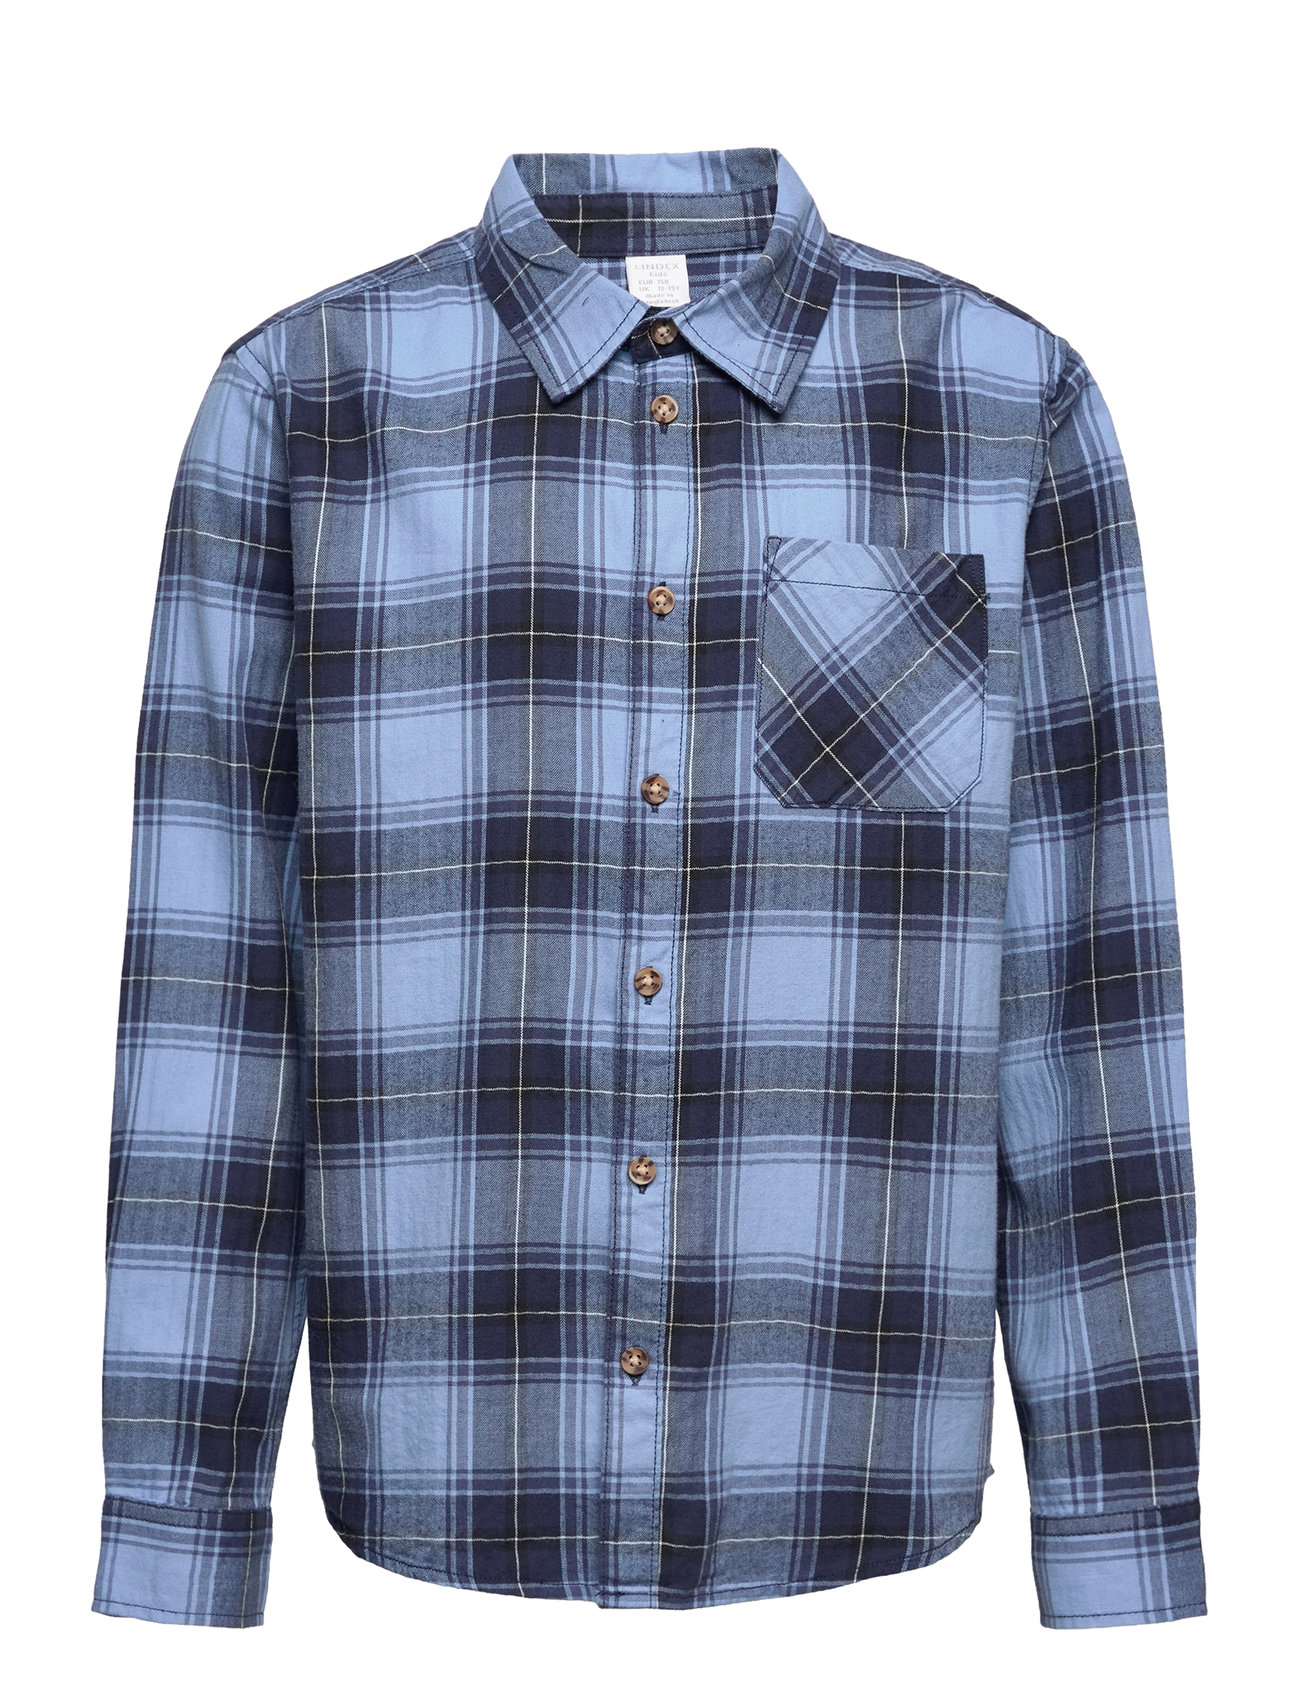 Shirt Flannel Check Tops Shirts Long-sleeved Shirts Blue Lindex